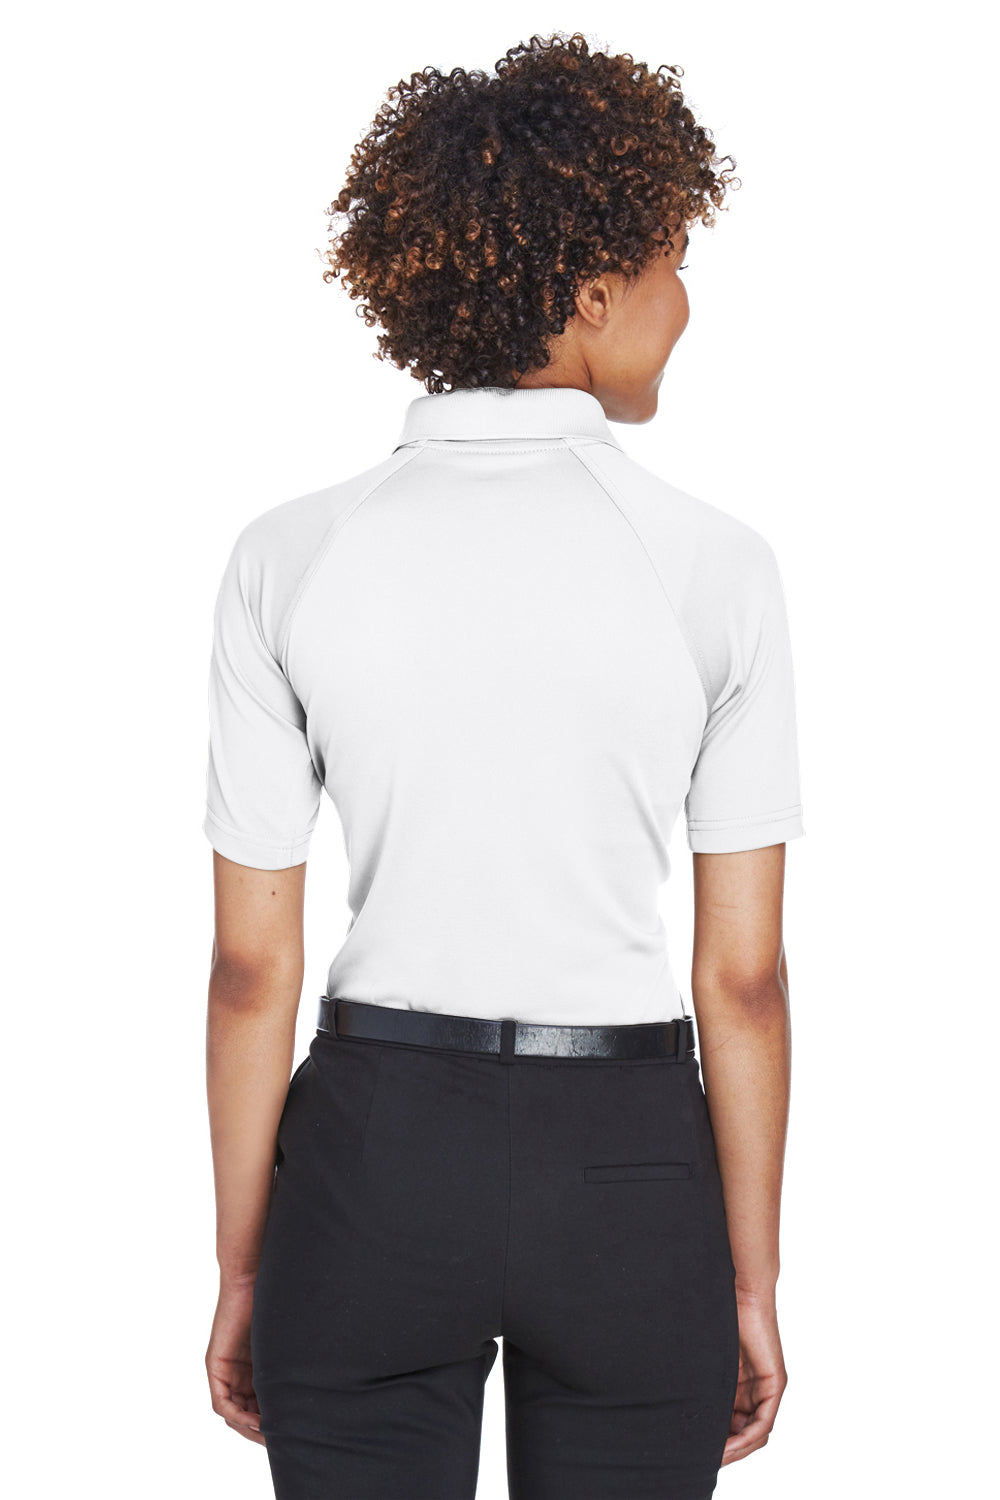 Harriton M211W Womens Advantage Tactical Moisture Wicking Short Sleeve Polo Shirt White Back